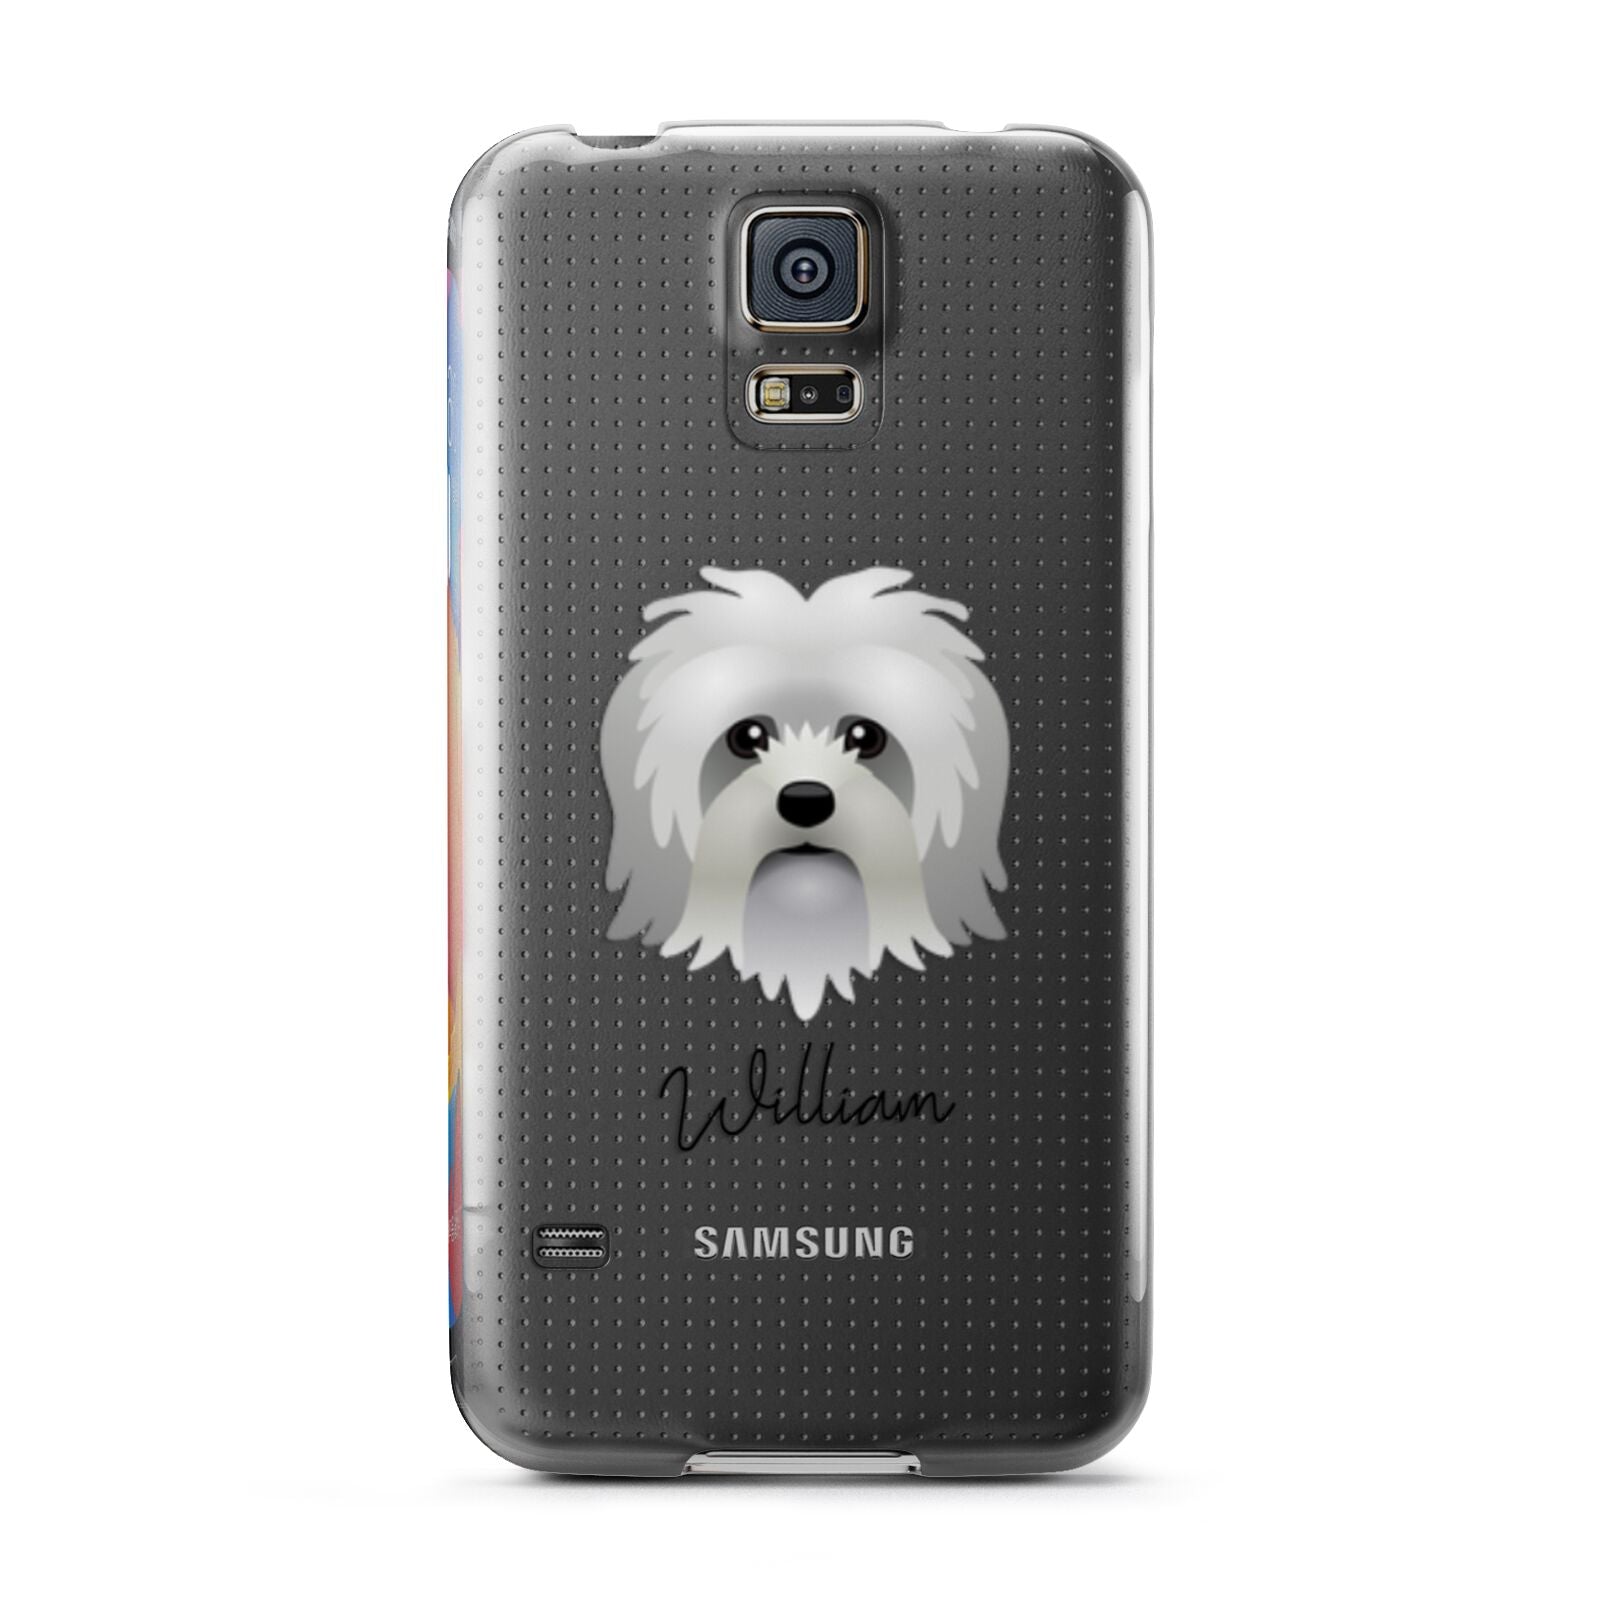 Lo wchen Personalised Samsung Galaxy S5 Case